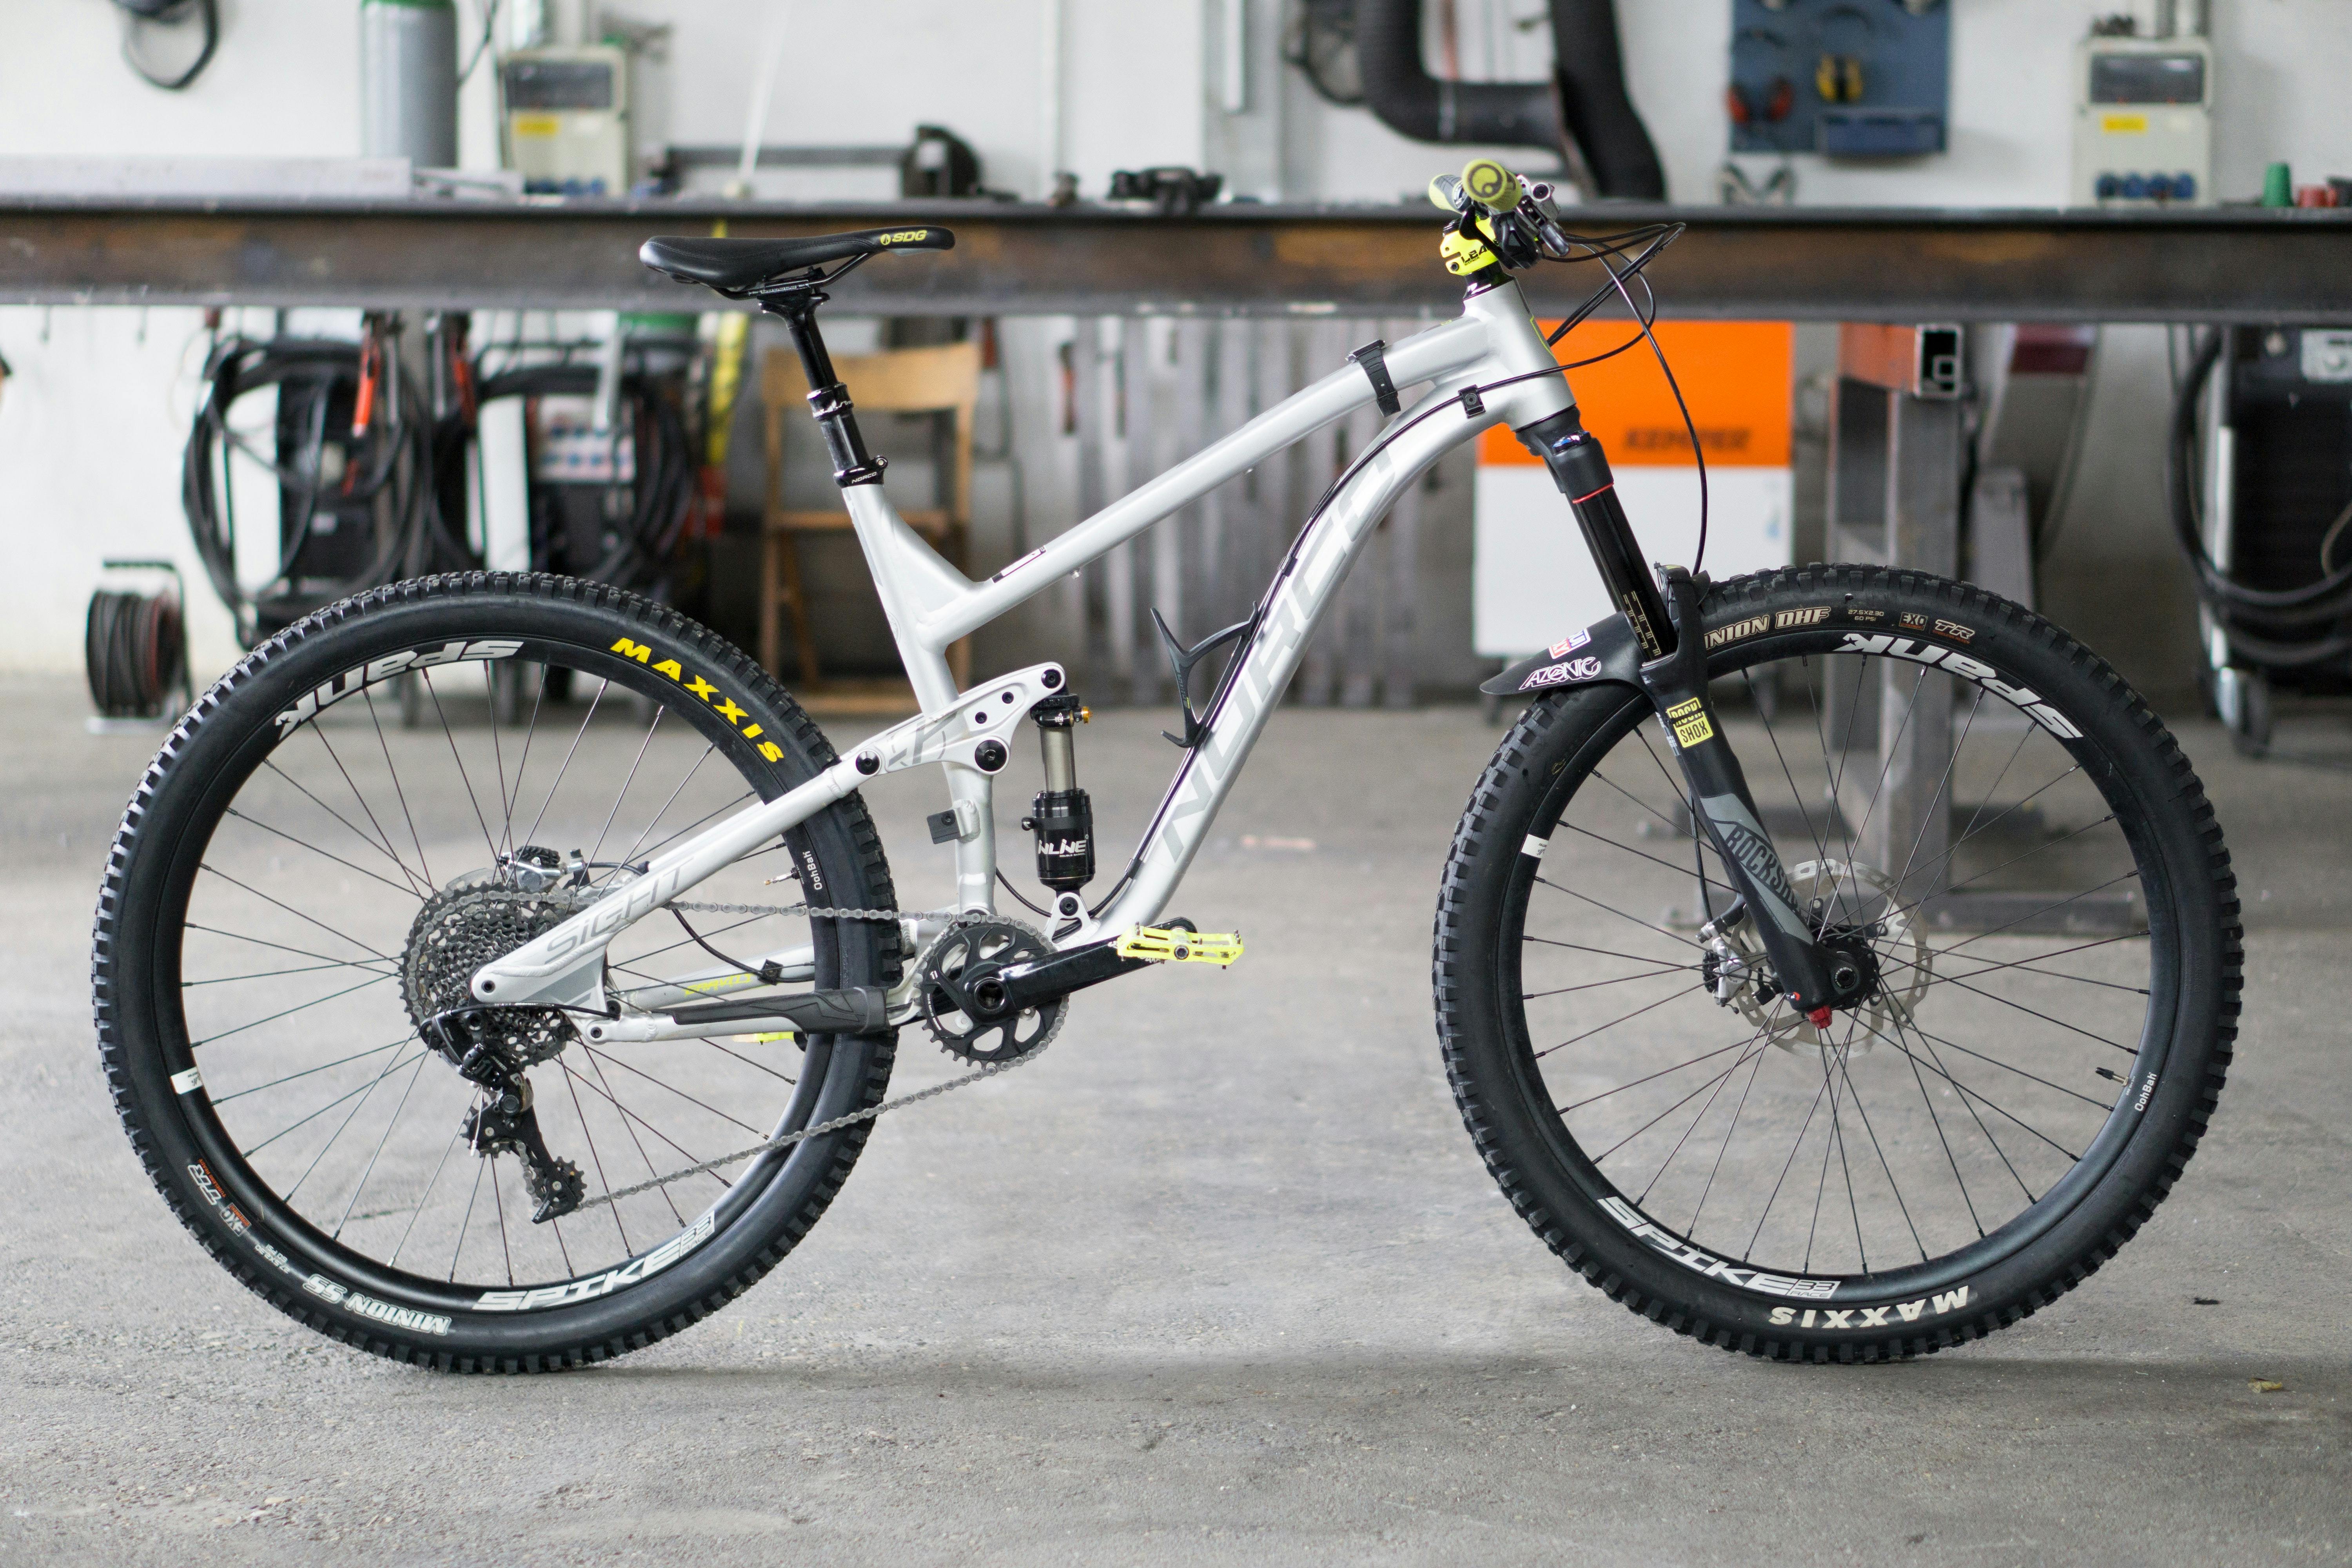 A white mountain bike in a garage